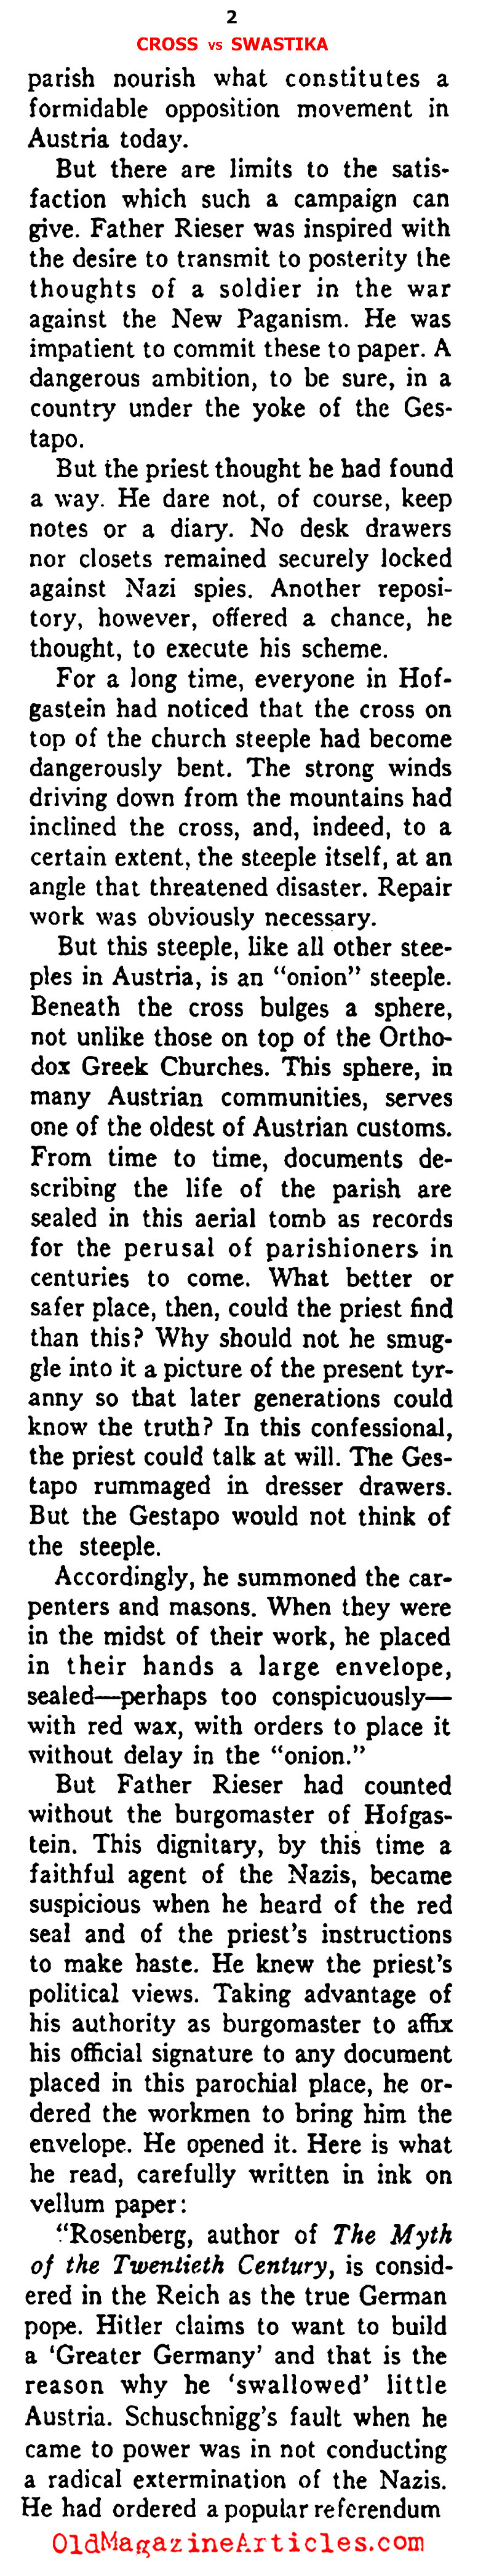 Nazis Against the Christian Churches (Ken Magazine, 1939)